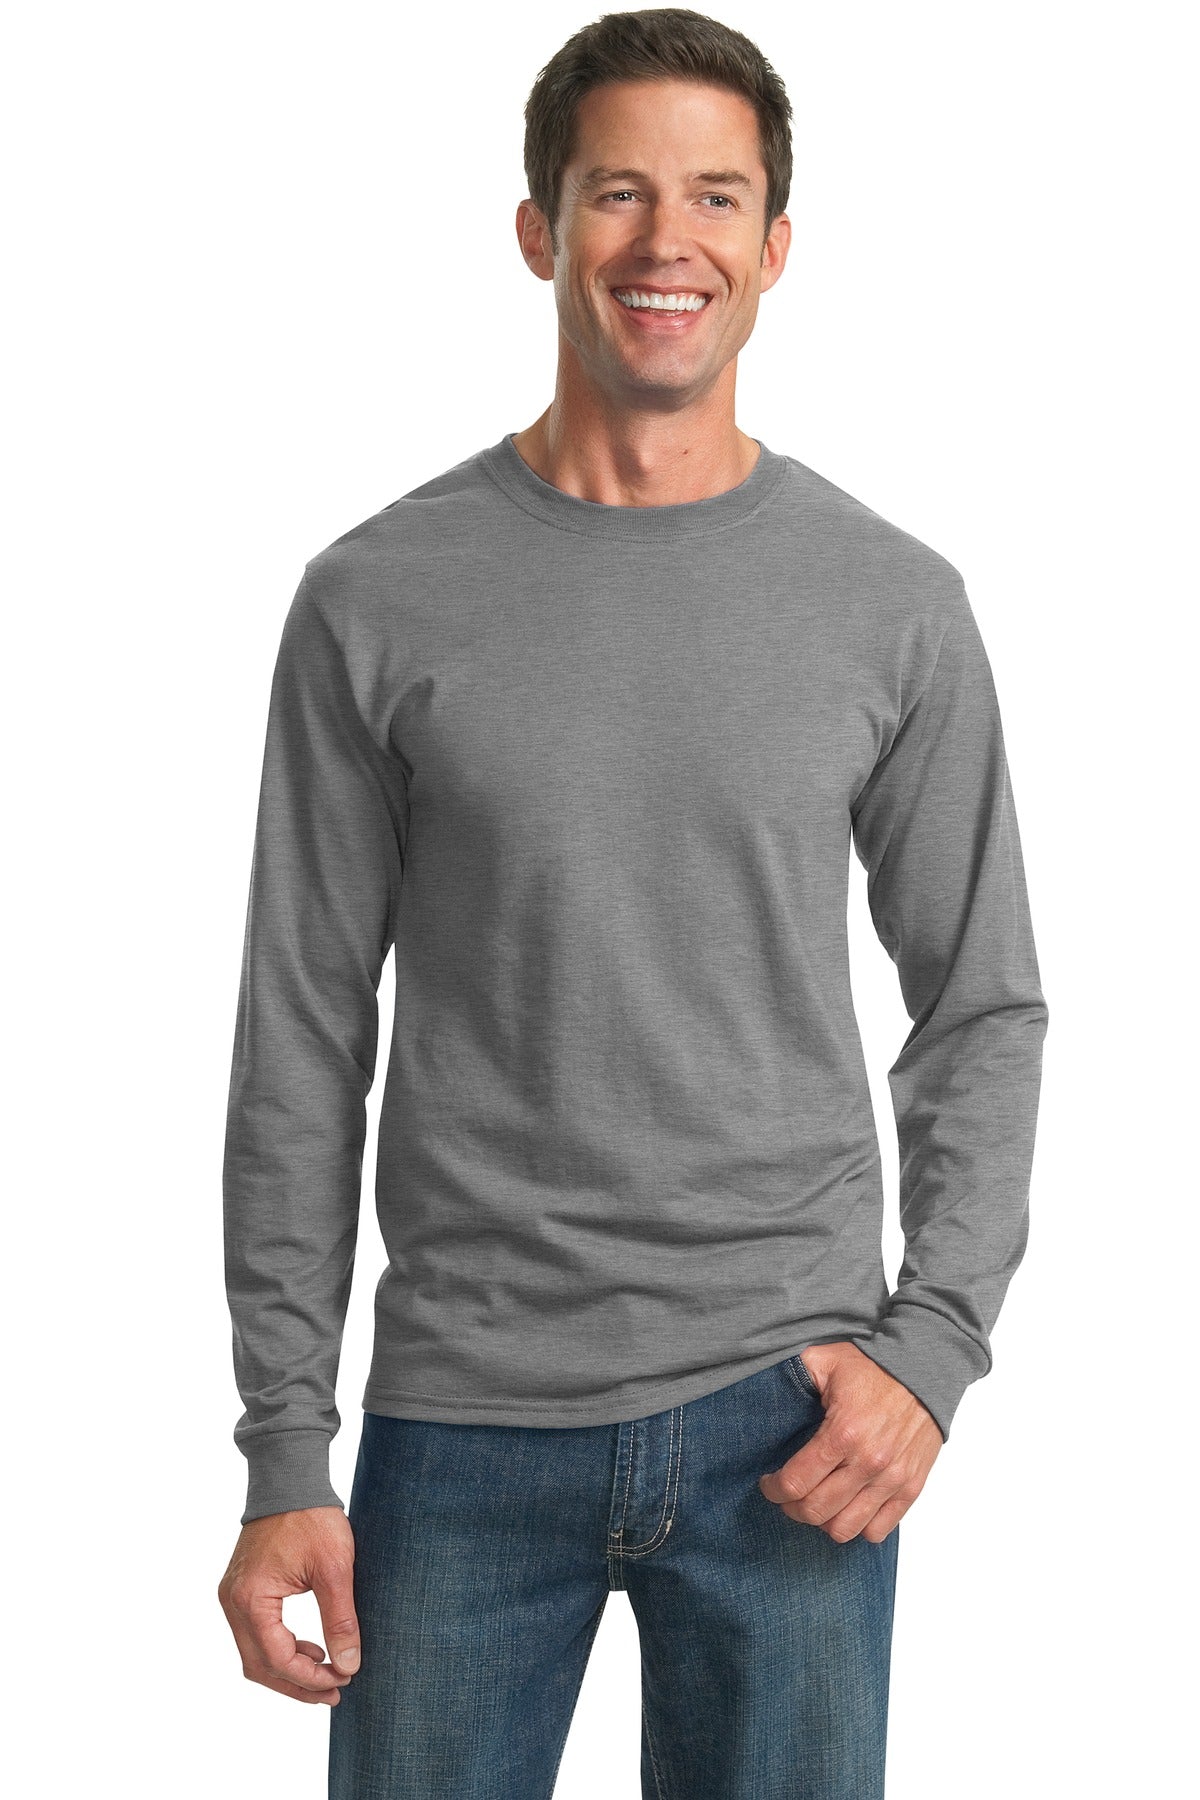 JERZEES® - Dri-Power® 50/50 Cotton/Poly Long Sleeve T-Shirt. 29LS [Oxford] - DFW Impression